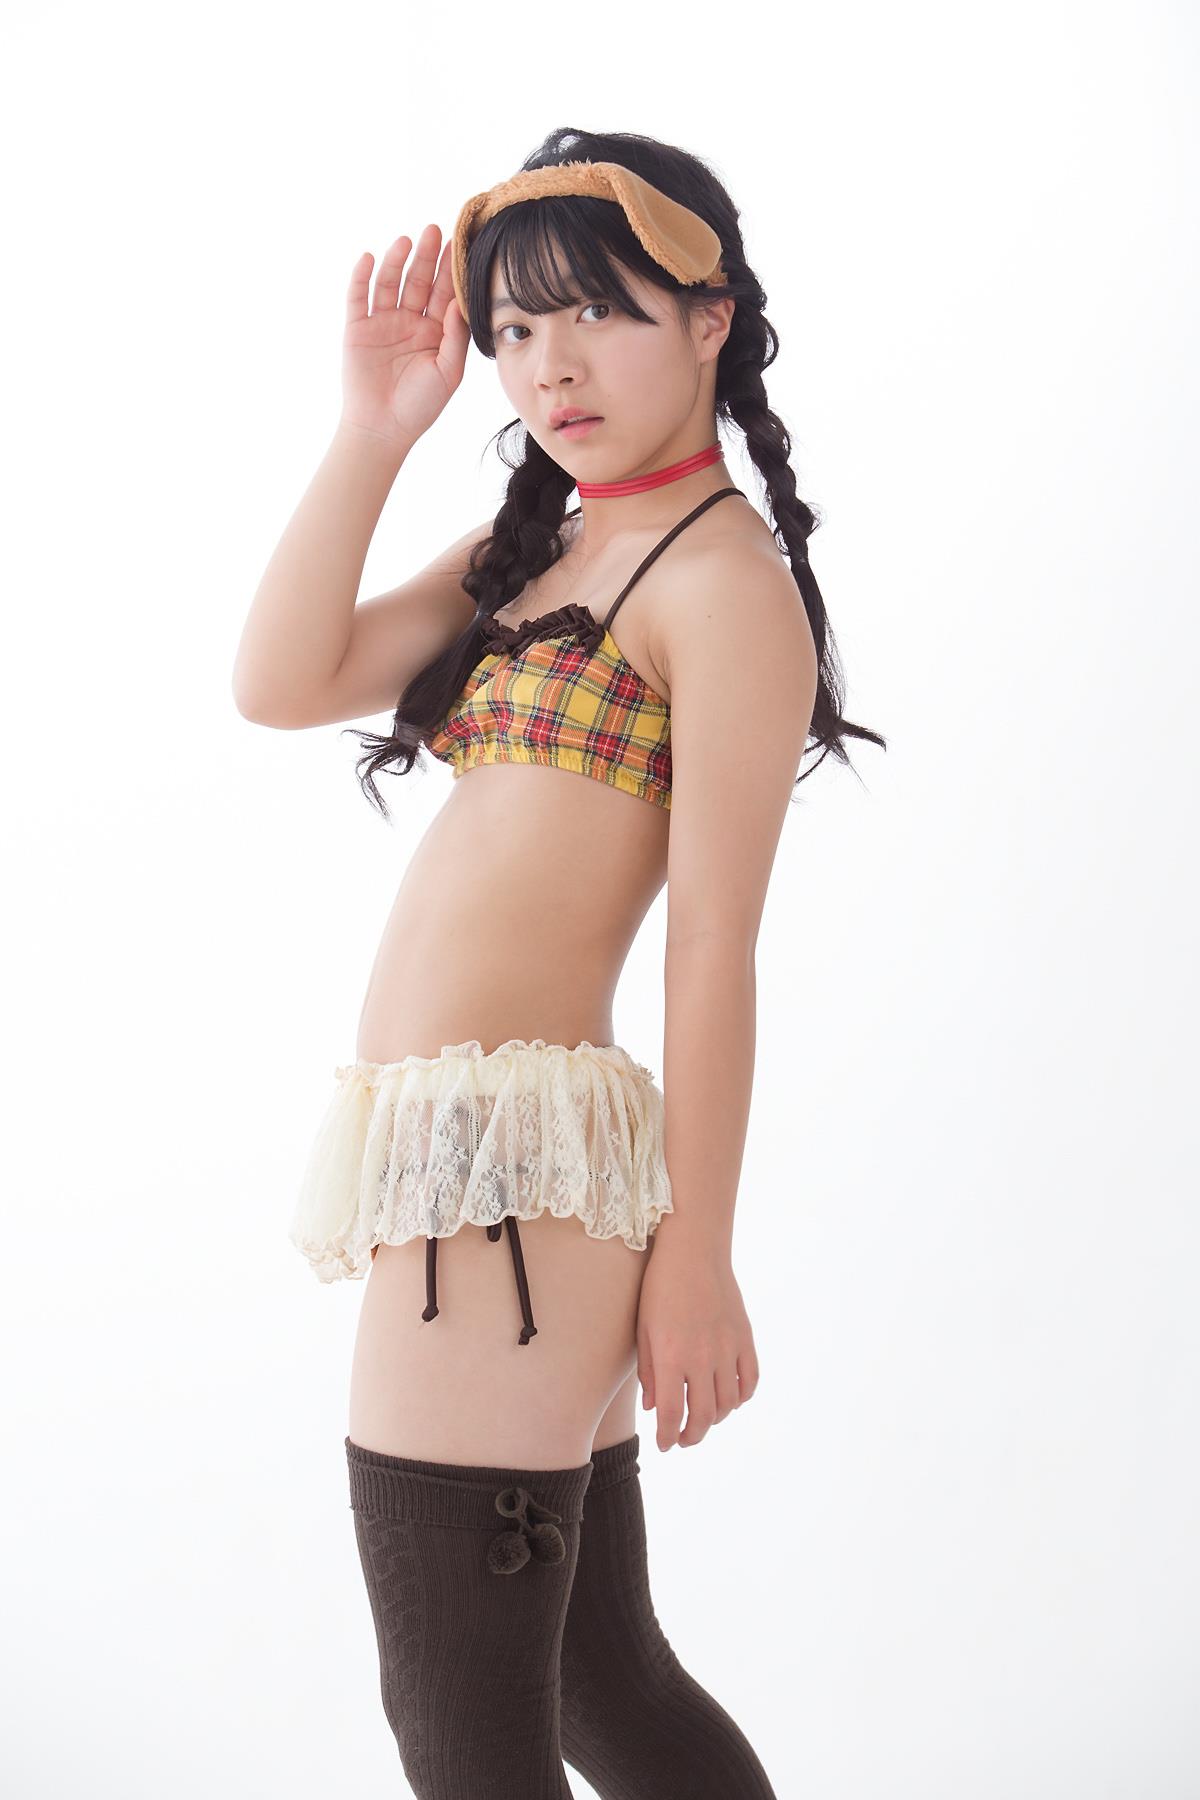 Minisuka.tv Saria Natsume 夏目咲莉愛 - Premium Gallery 2.5 - 22.jpg